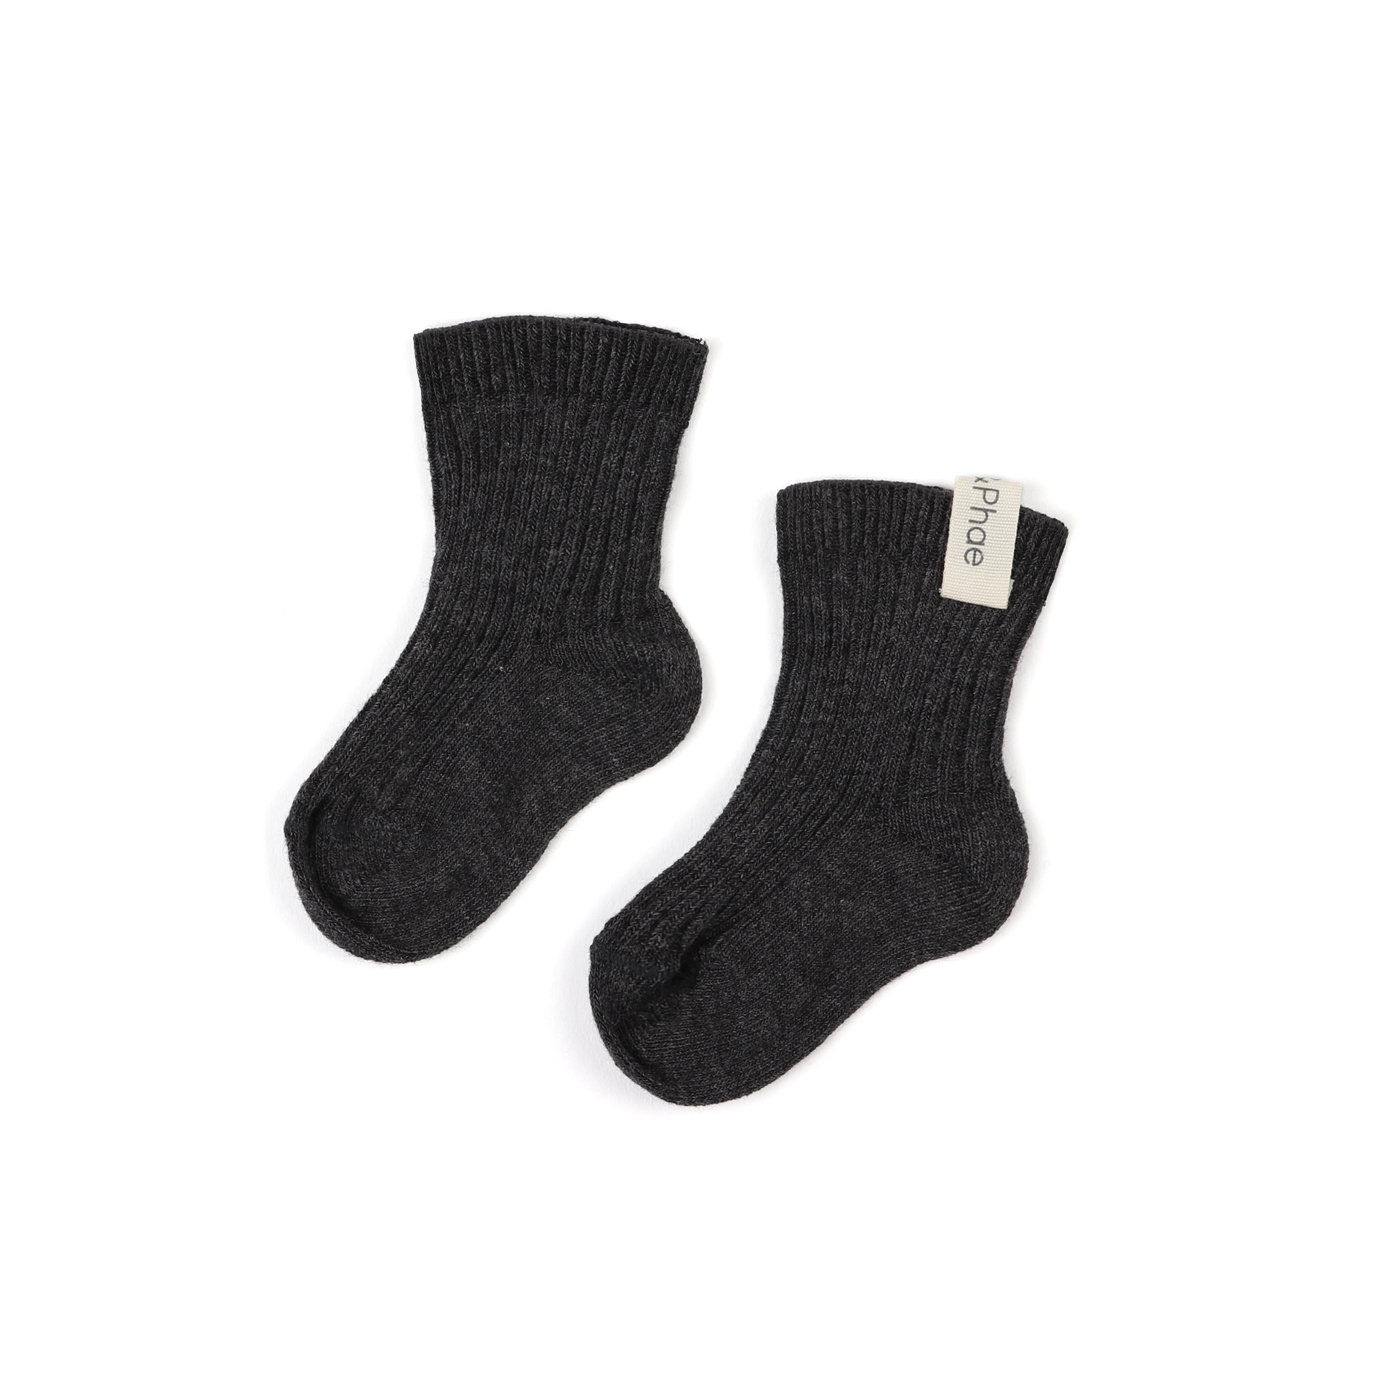 Ribbed baby socks - Charcoal-1